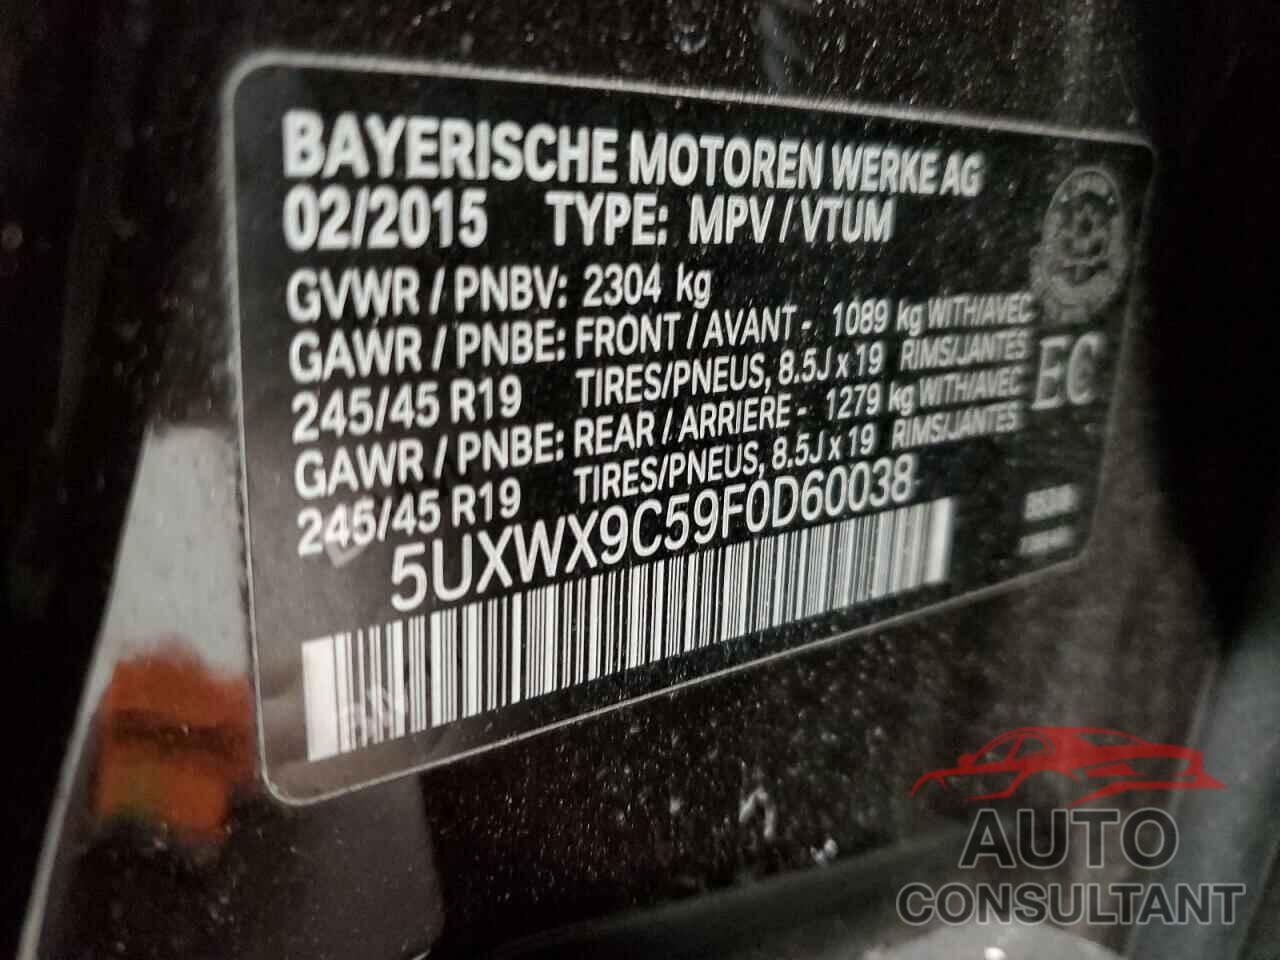 BMW X3 2015 - 5UXWX9C59F0D60038